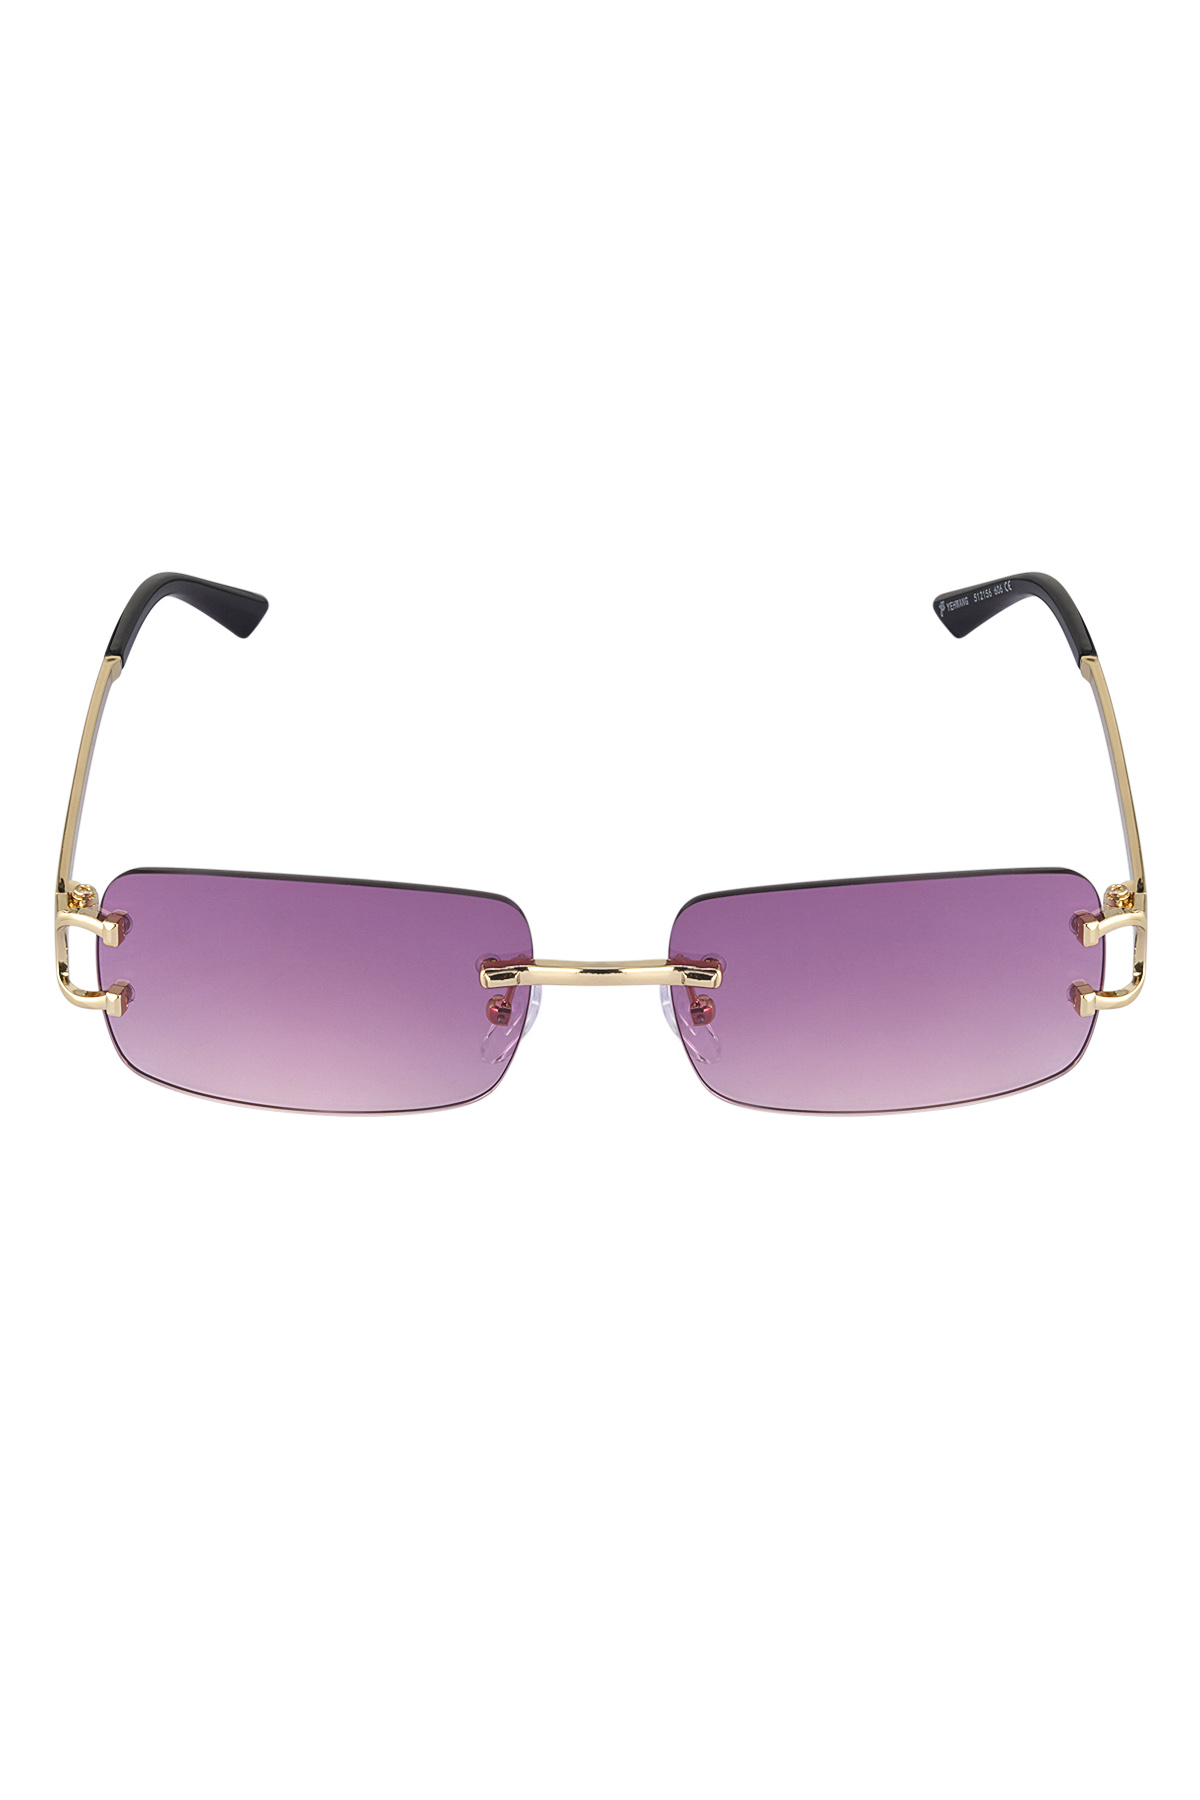 Sunglasses Sunbeam - purple h5 Picture4